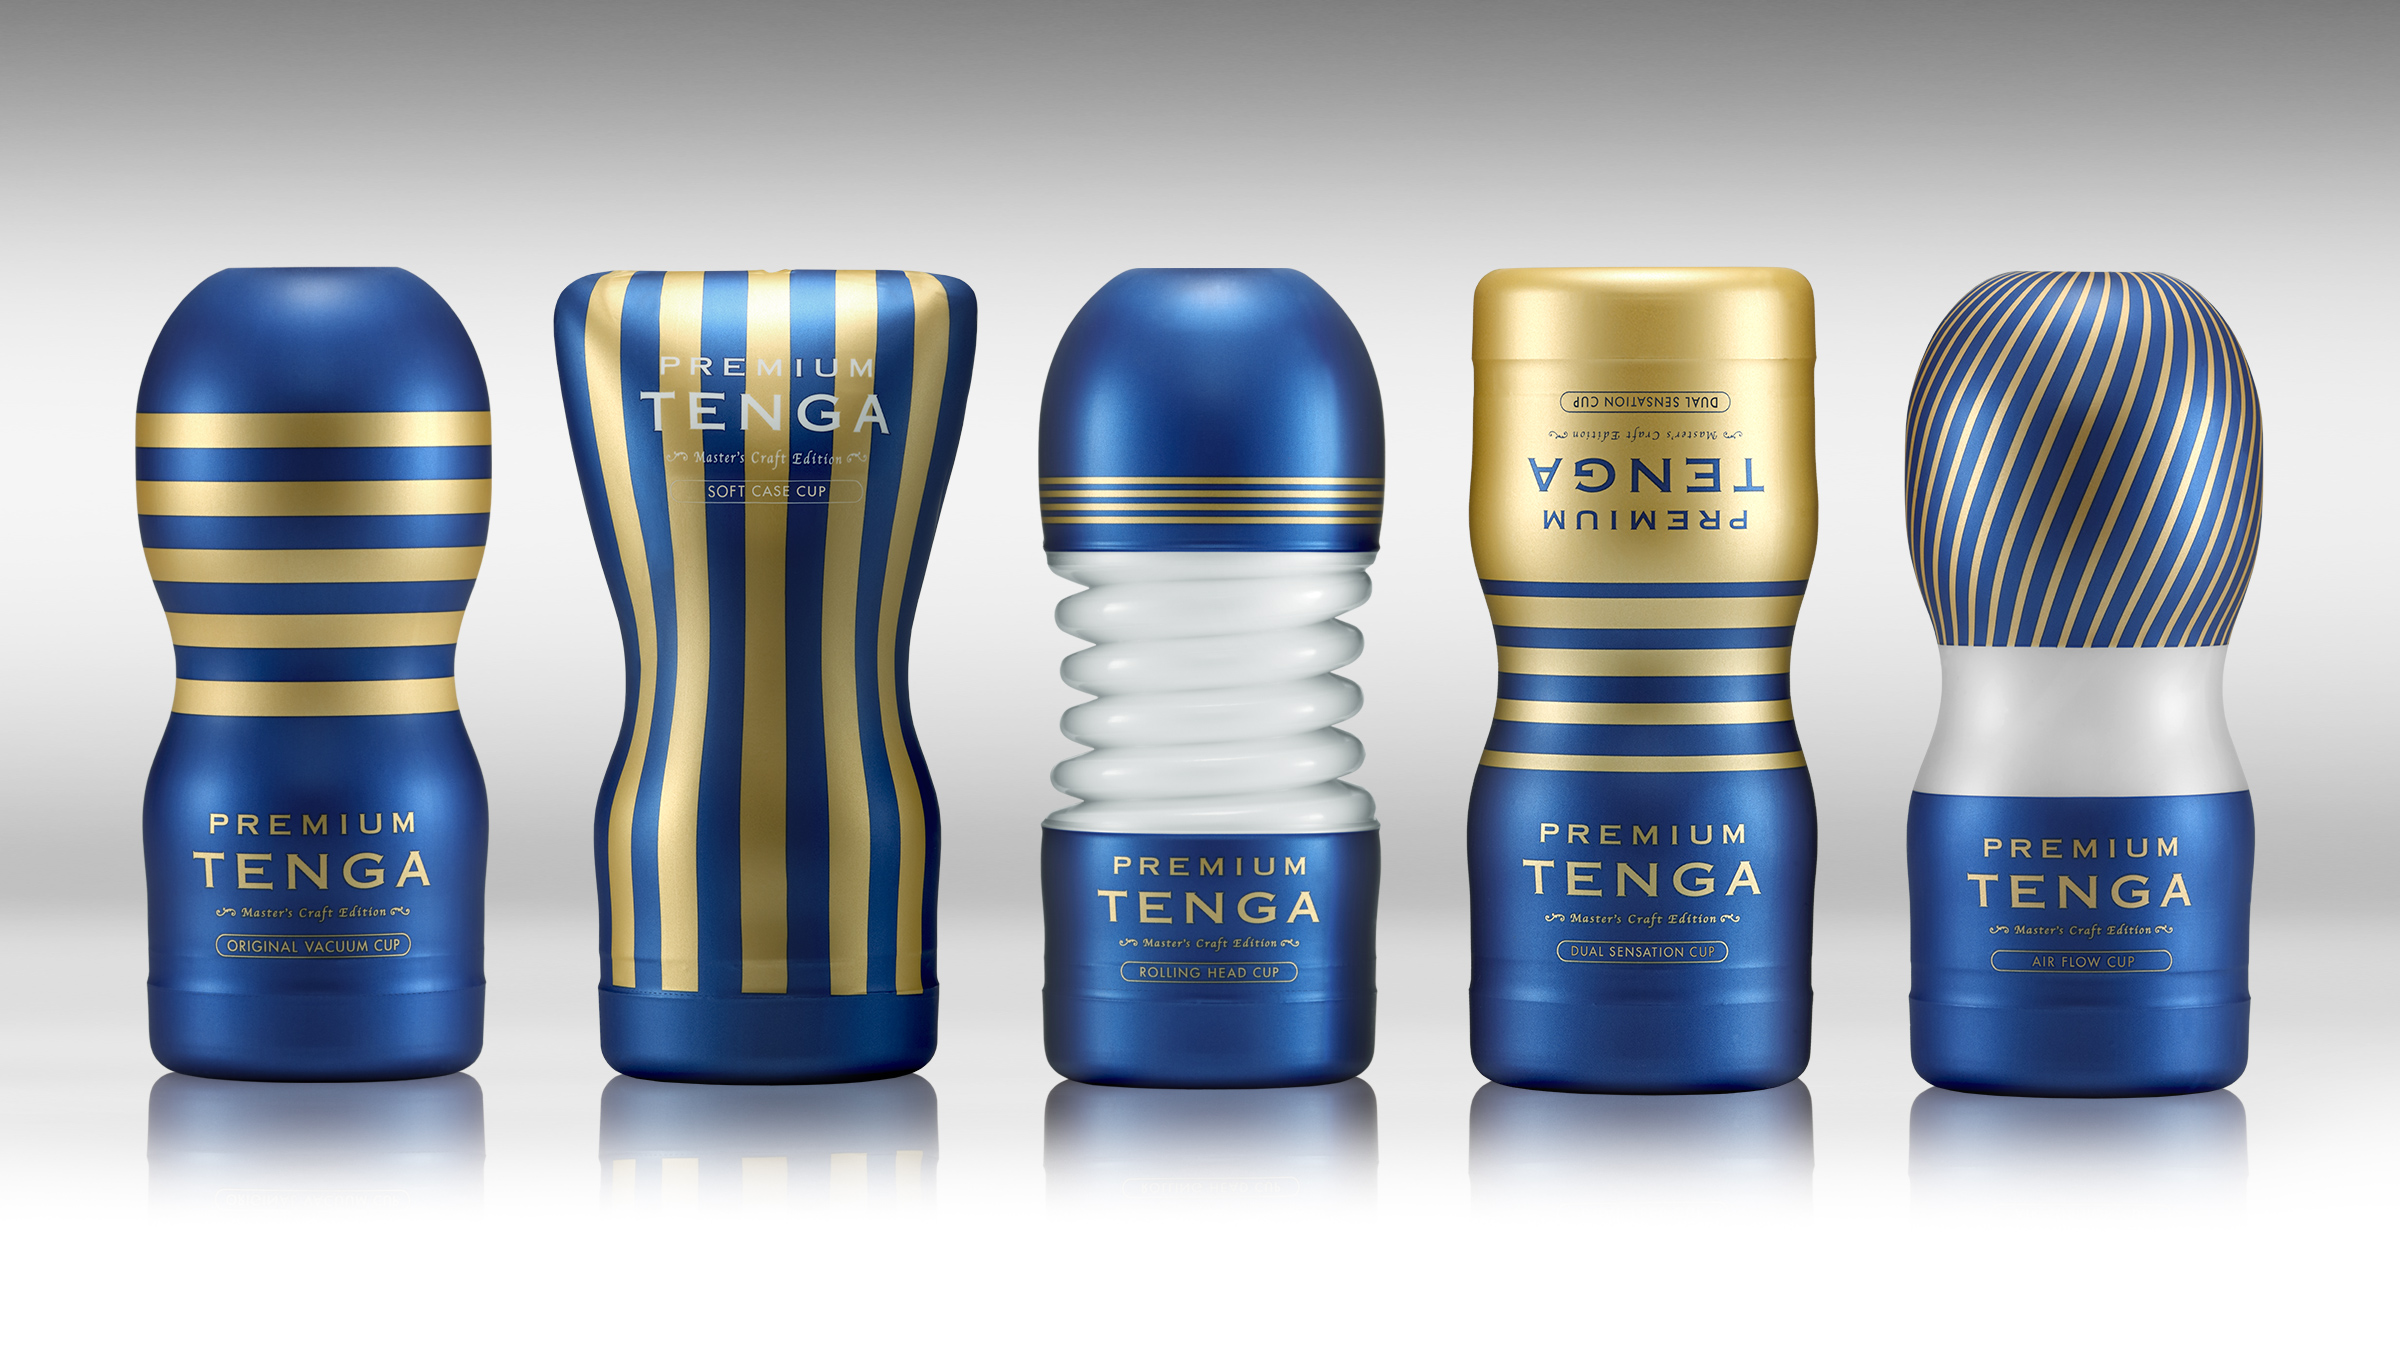 Tenga cup review